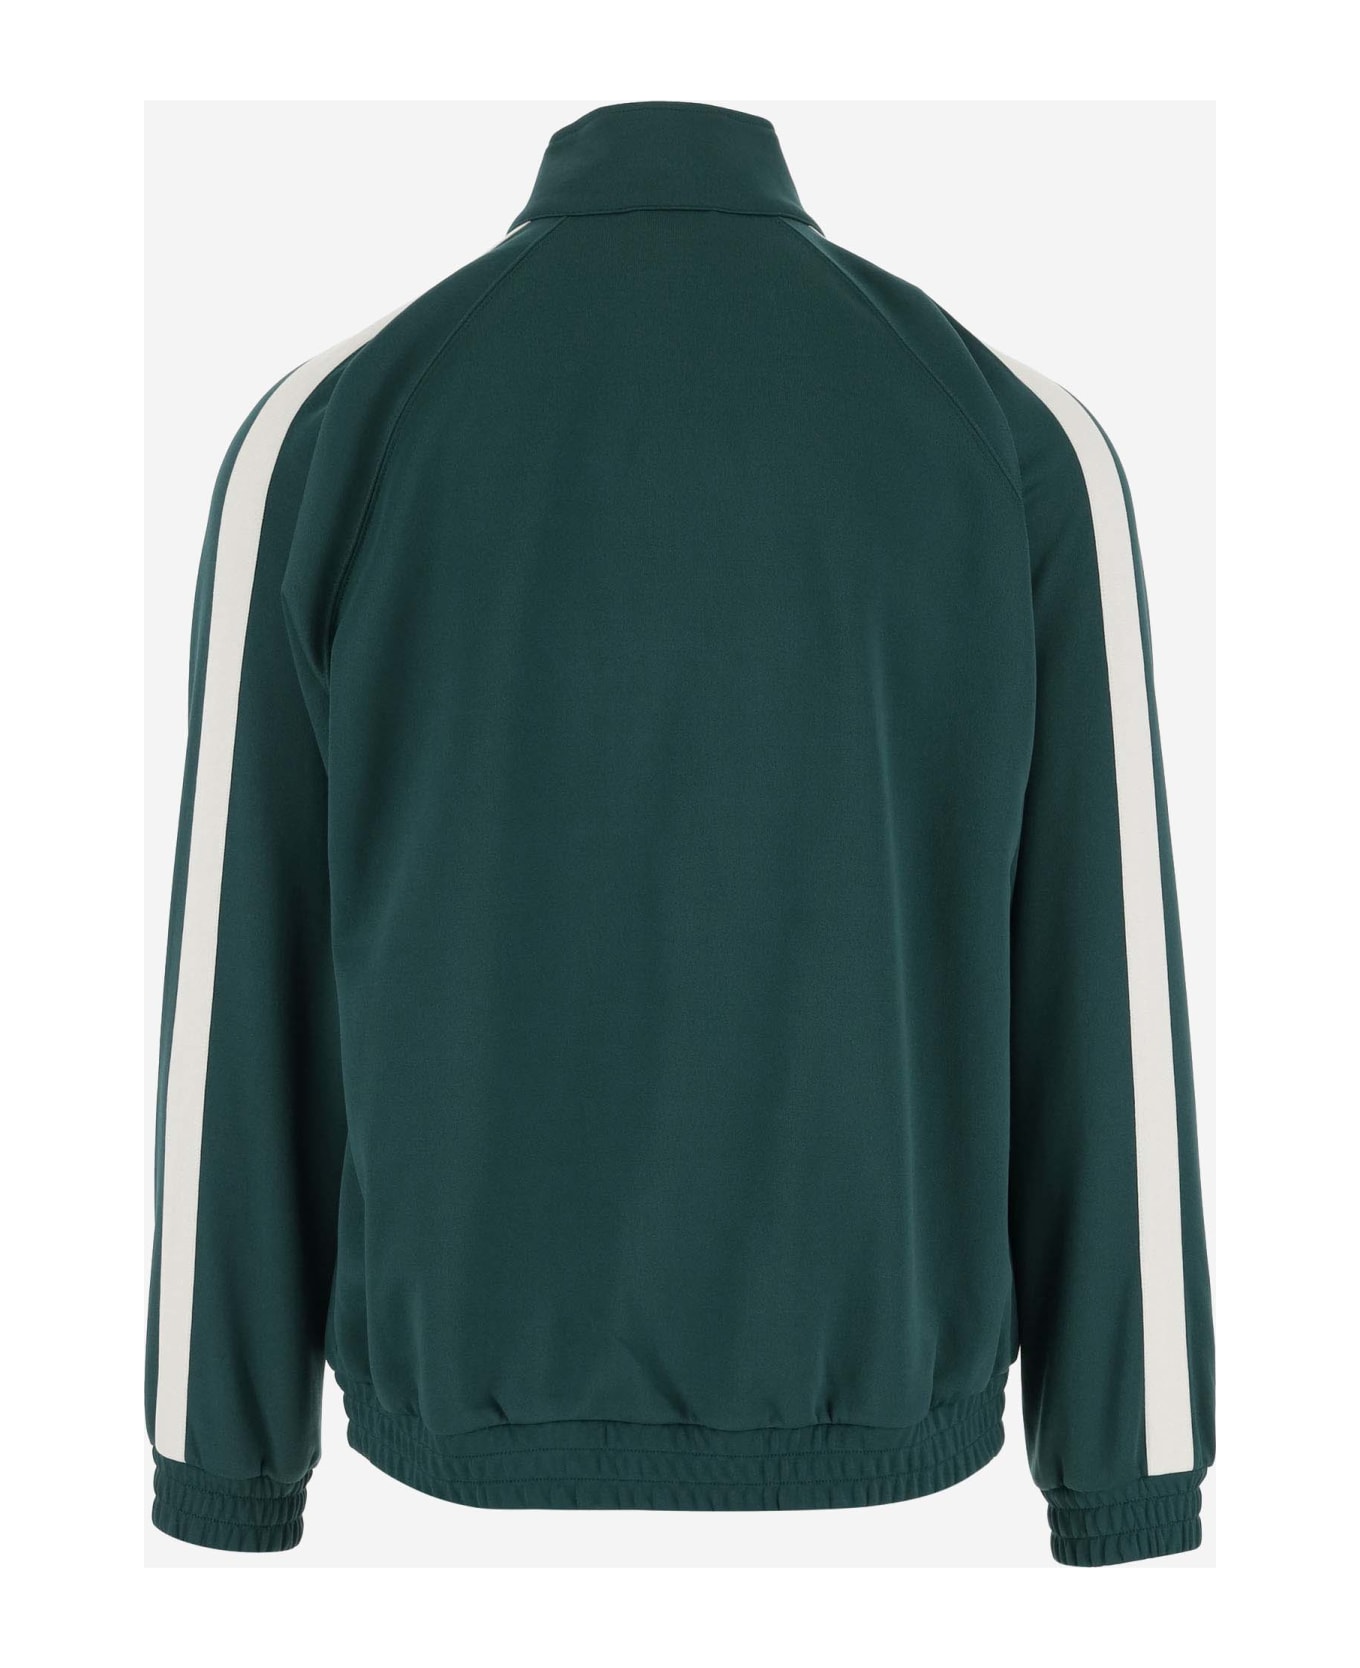 Carhartt Technical Fabric Sports Jacket - Green